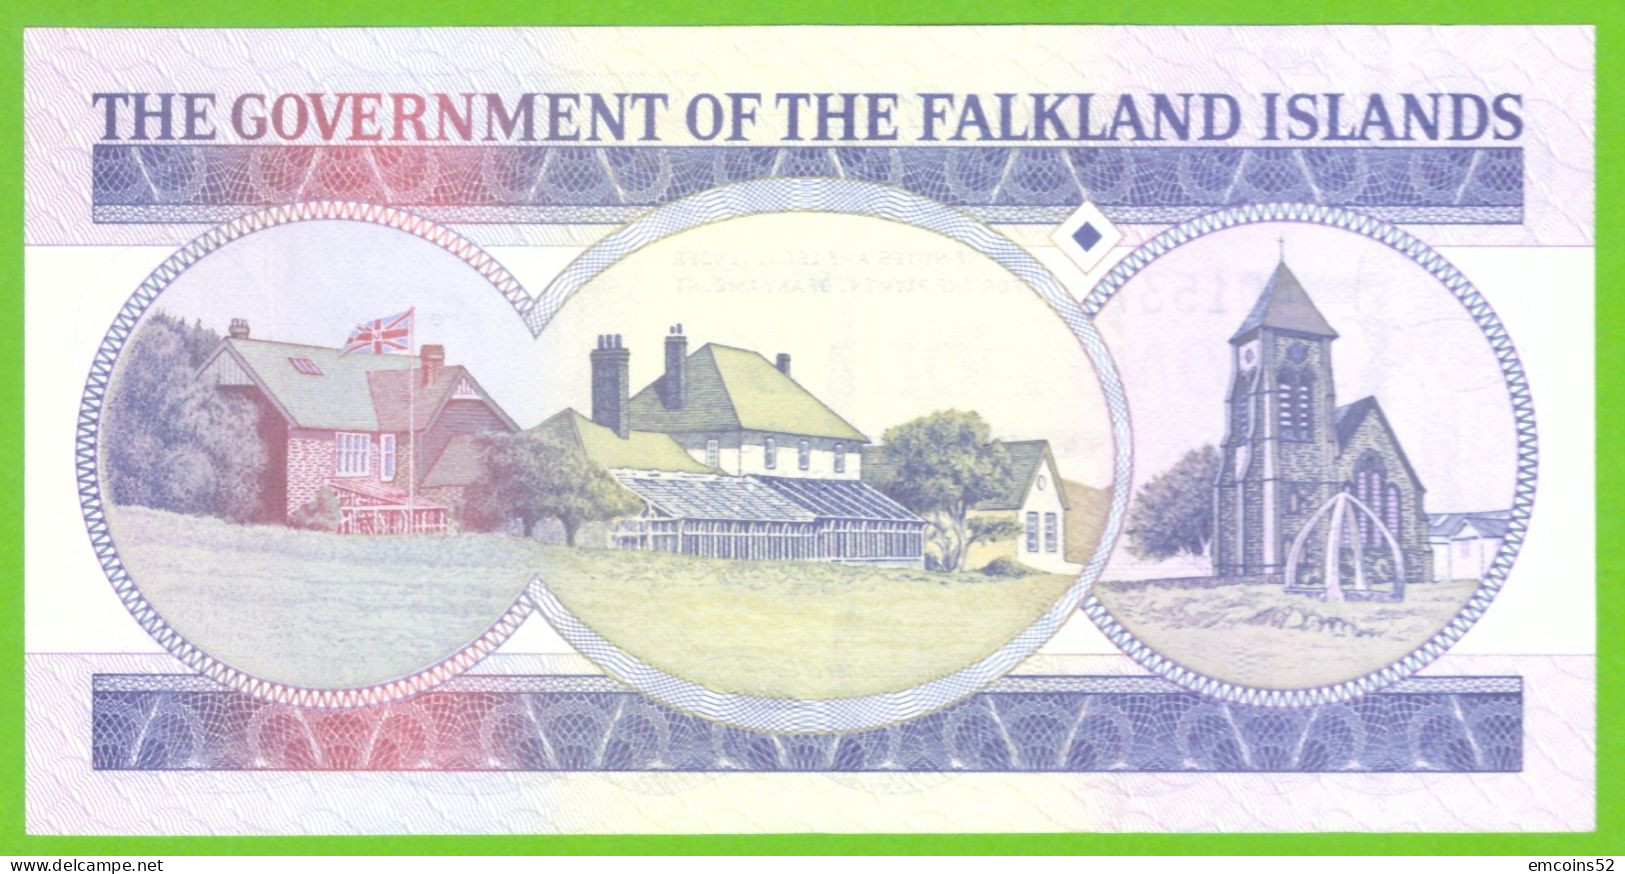 FALKLAND ISLAND 1 POUND 1984 P-13 UNC- - Falkland